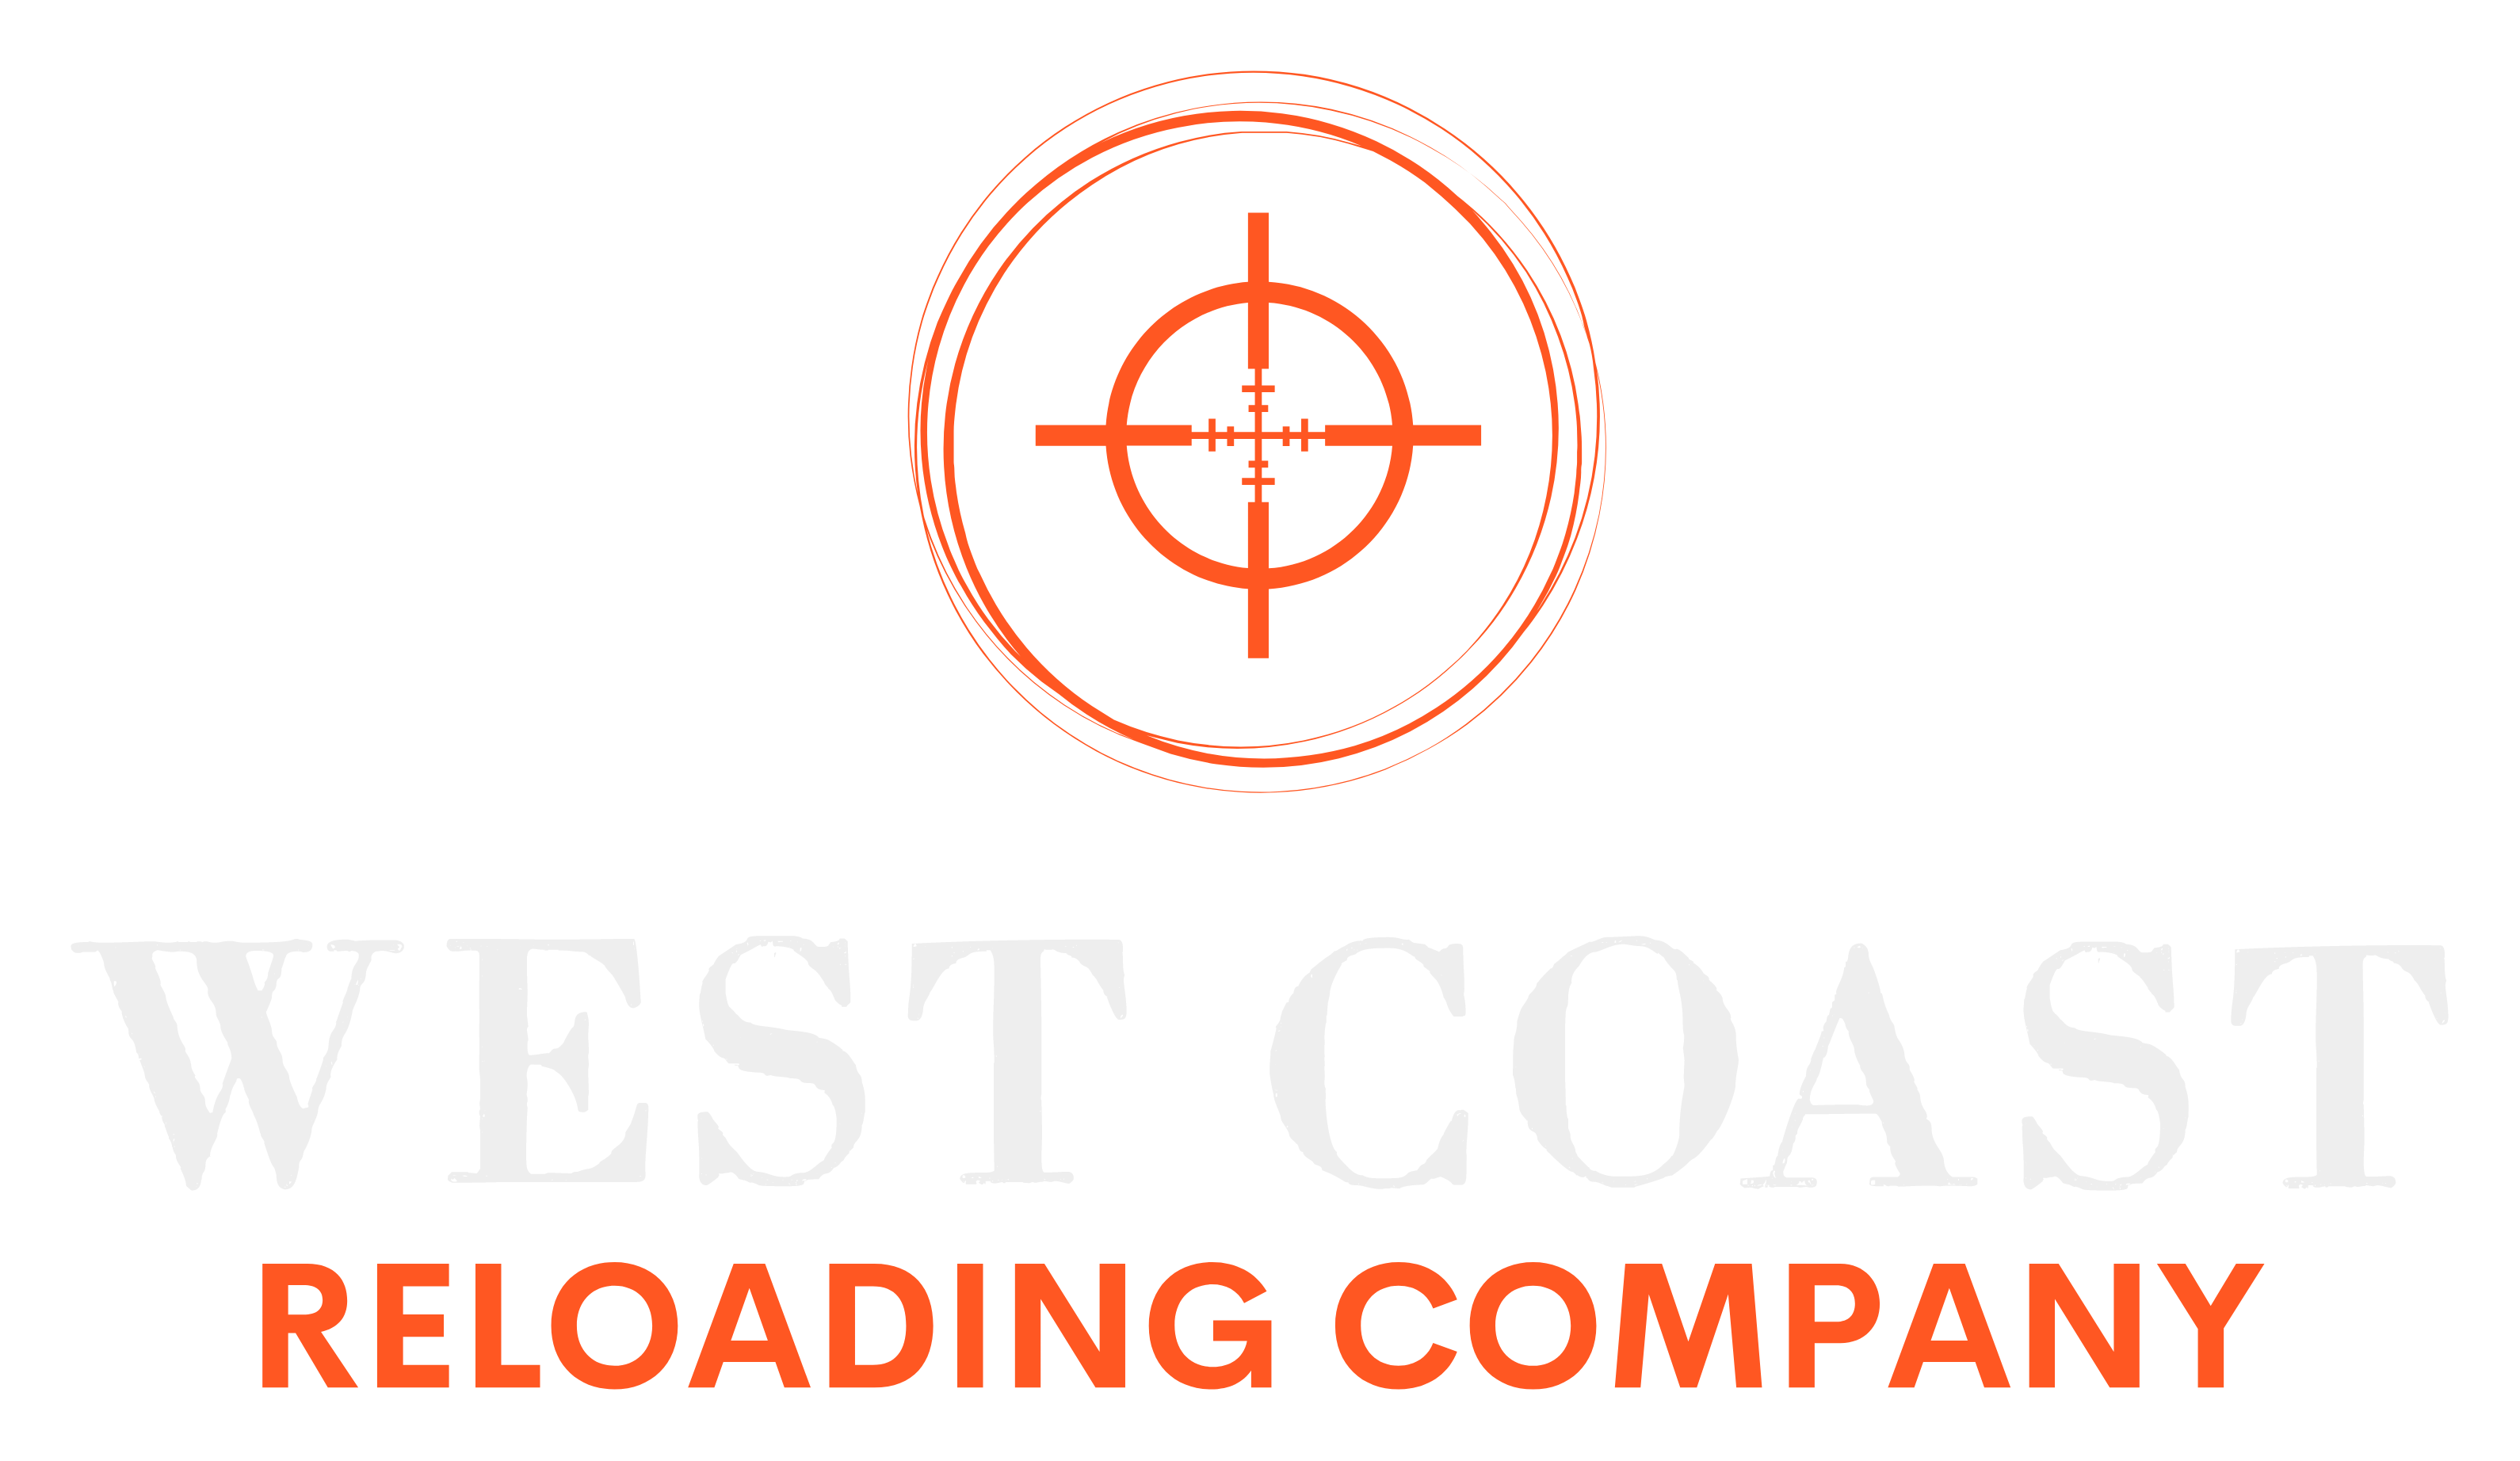 West Coast Reloading Company